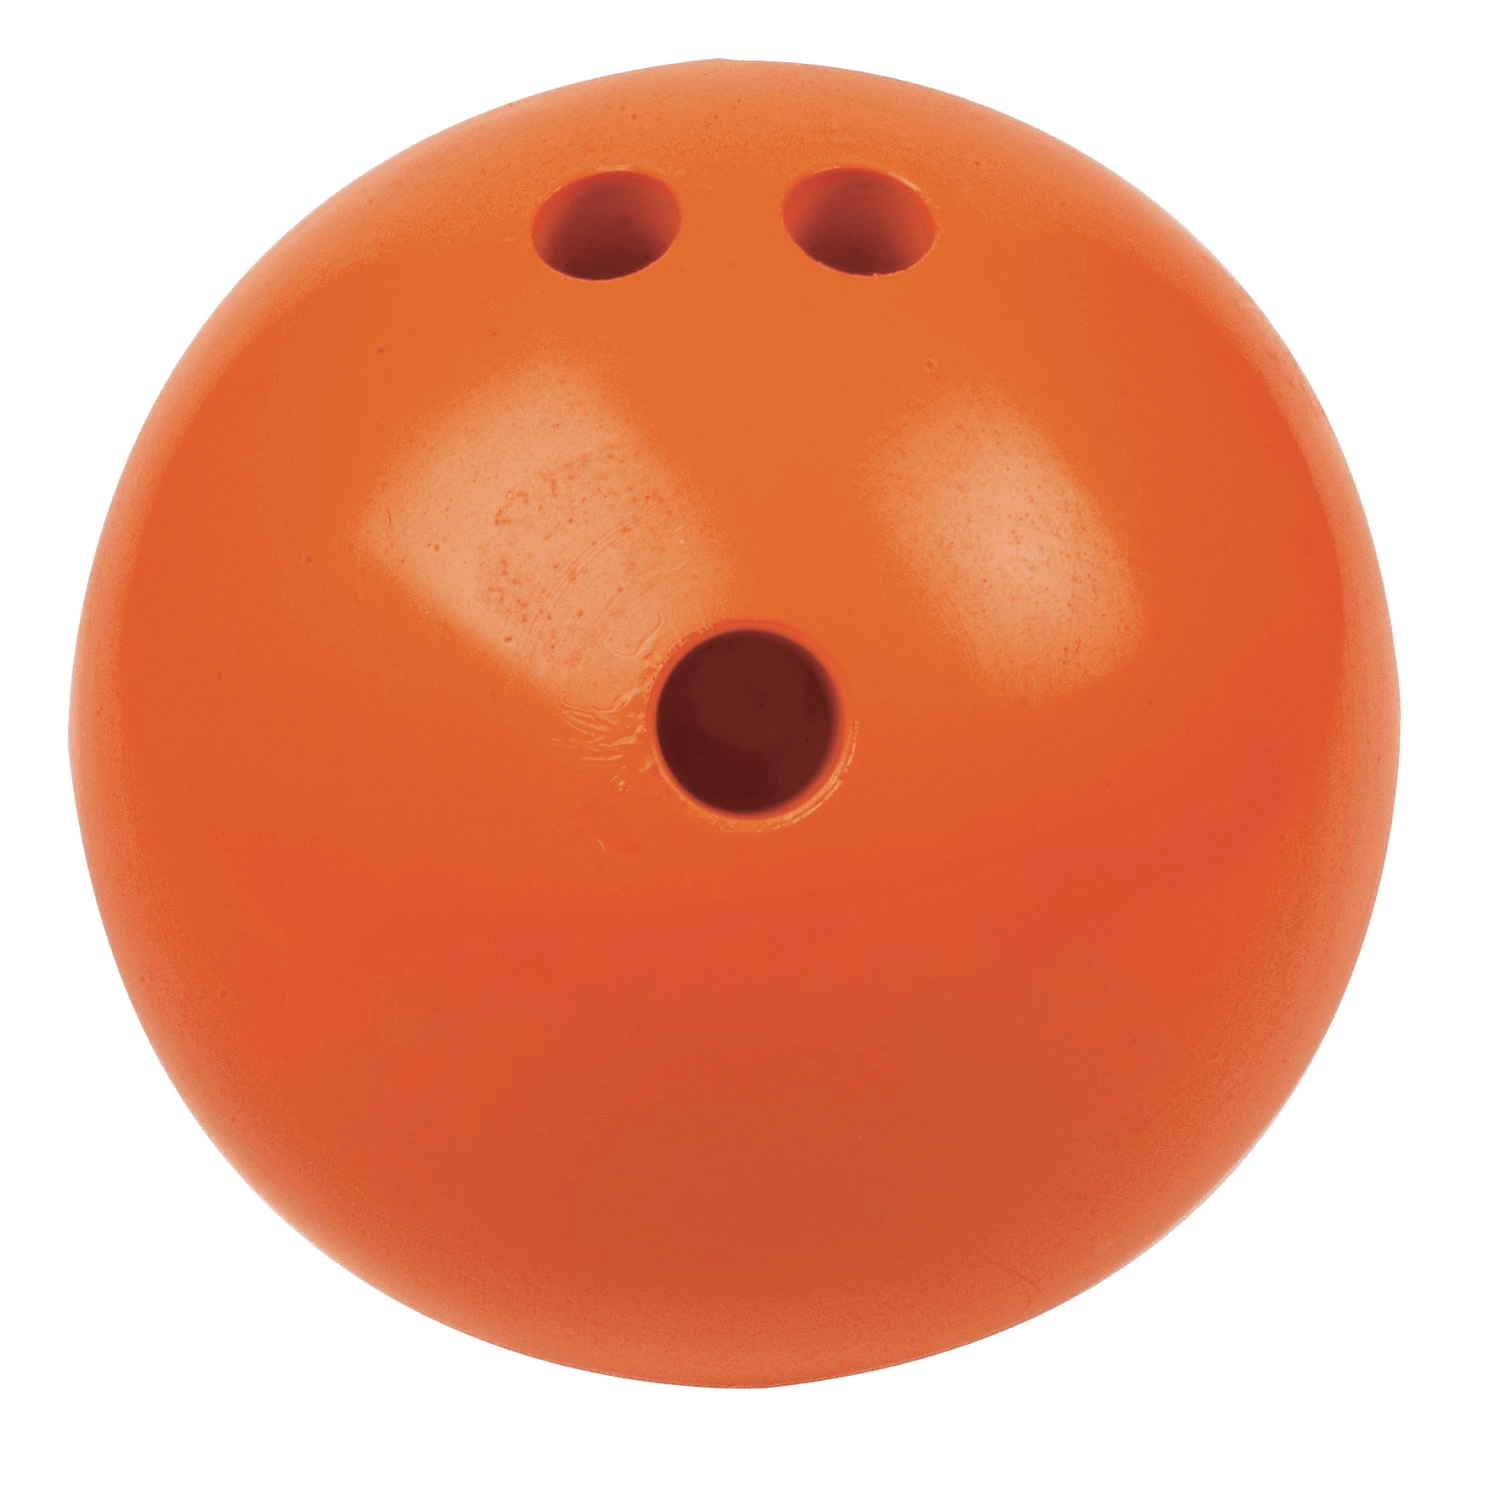 orange clipart balls